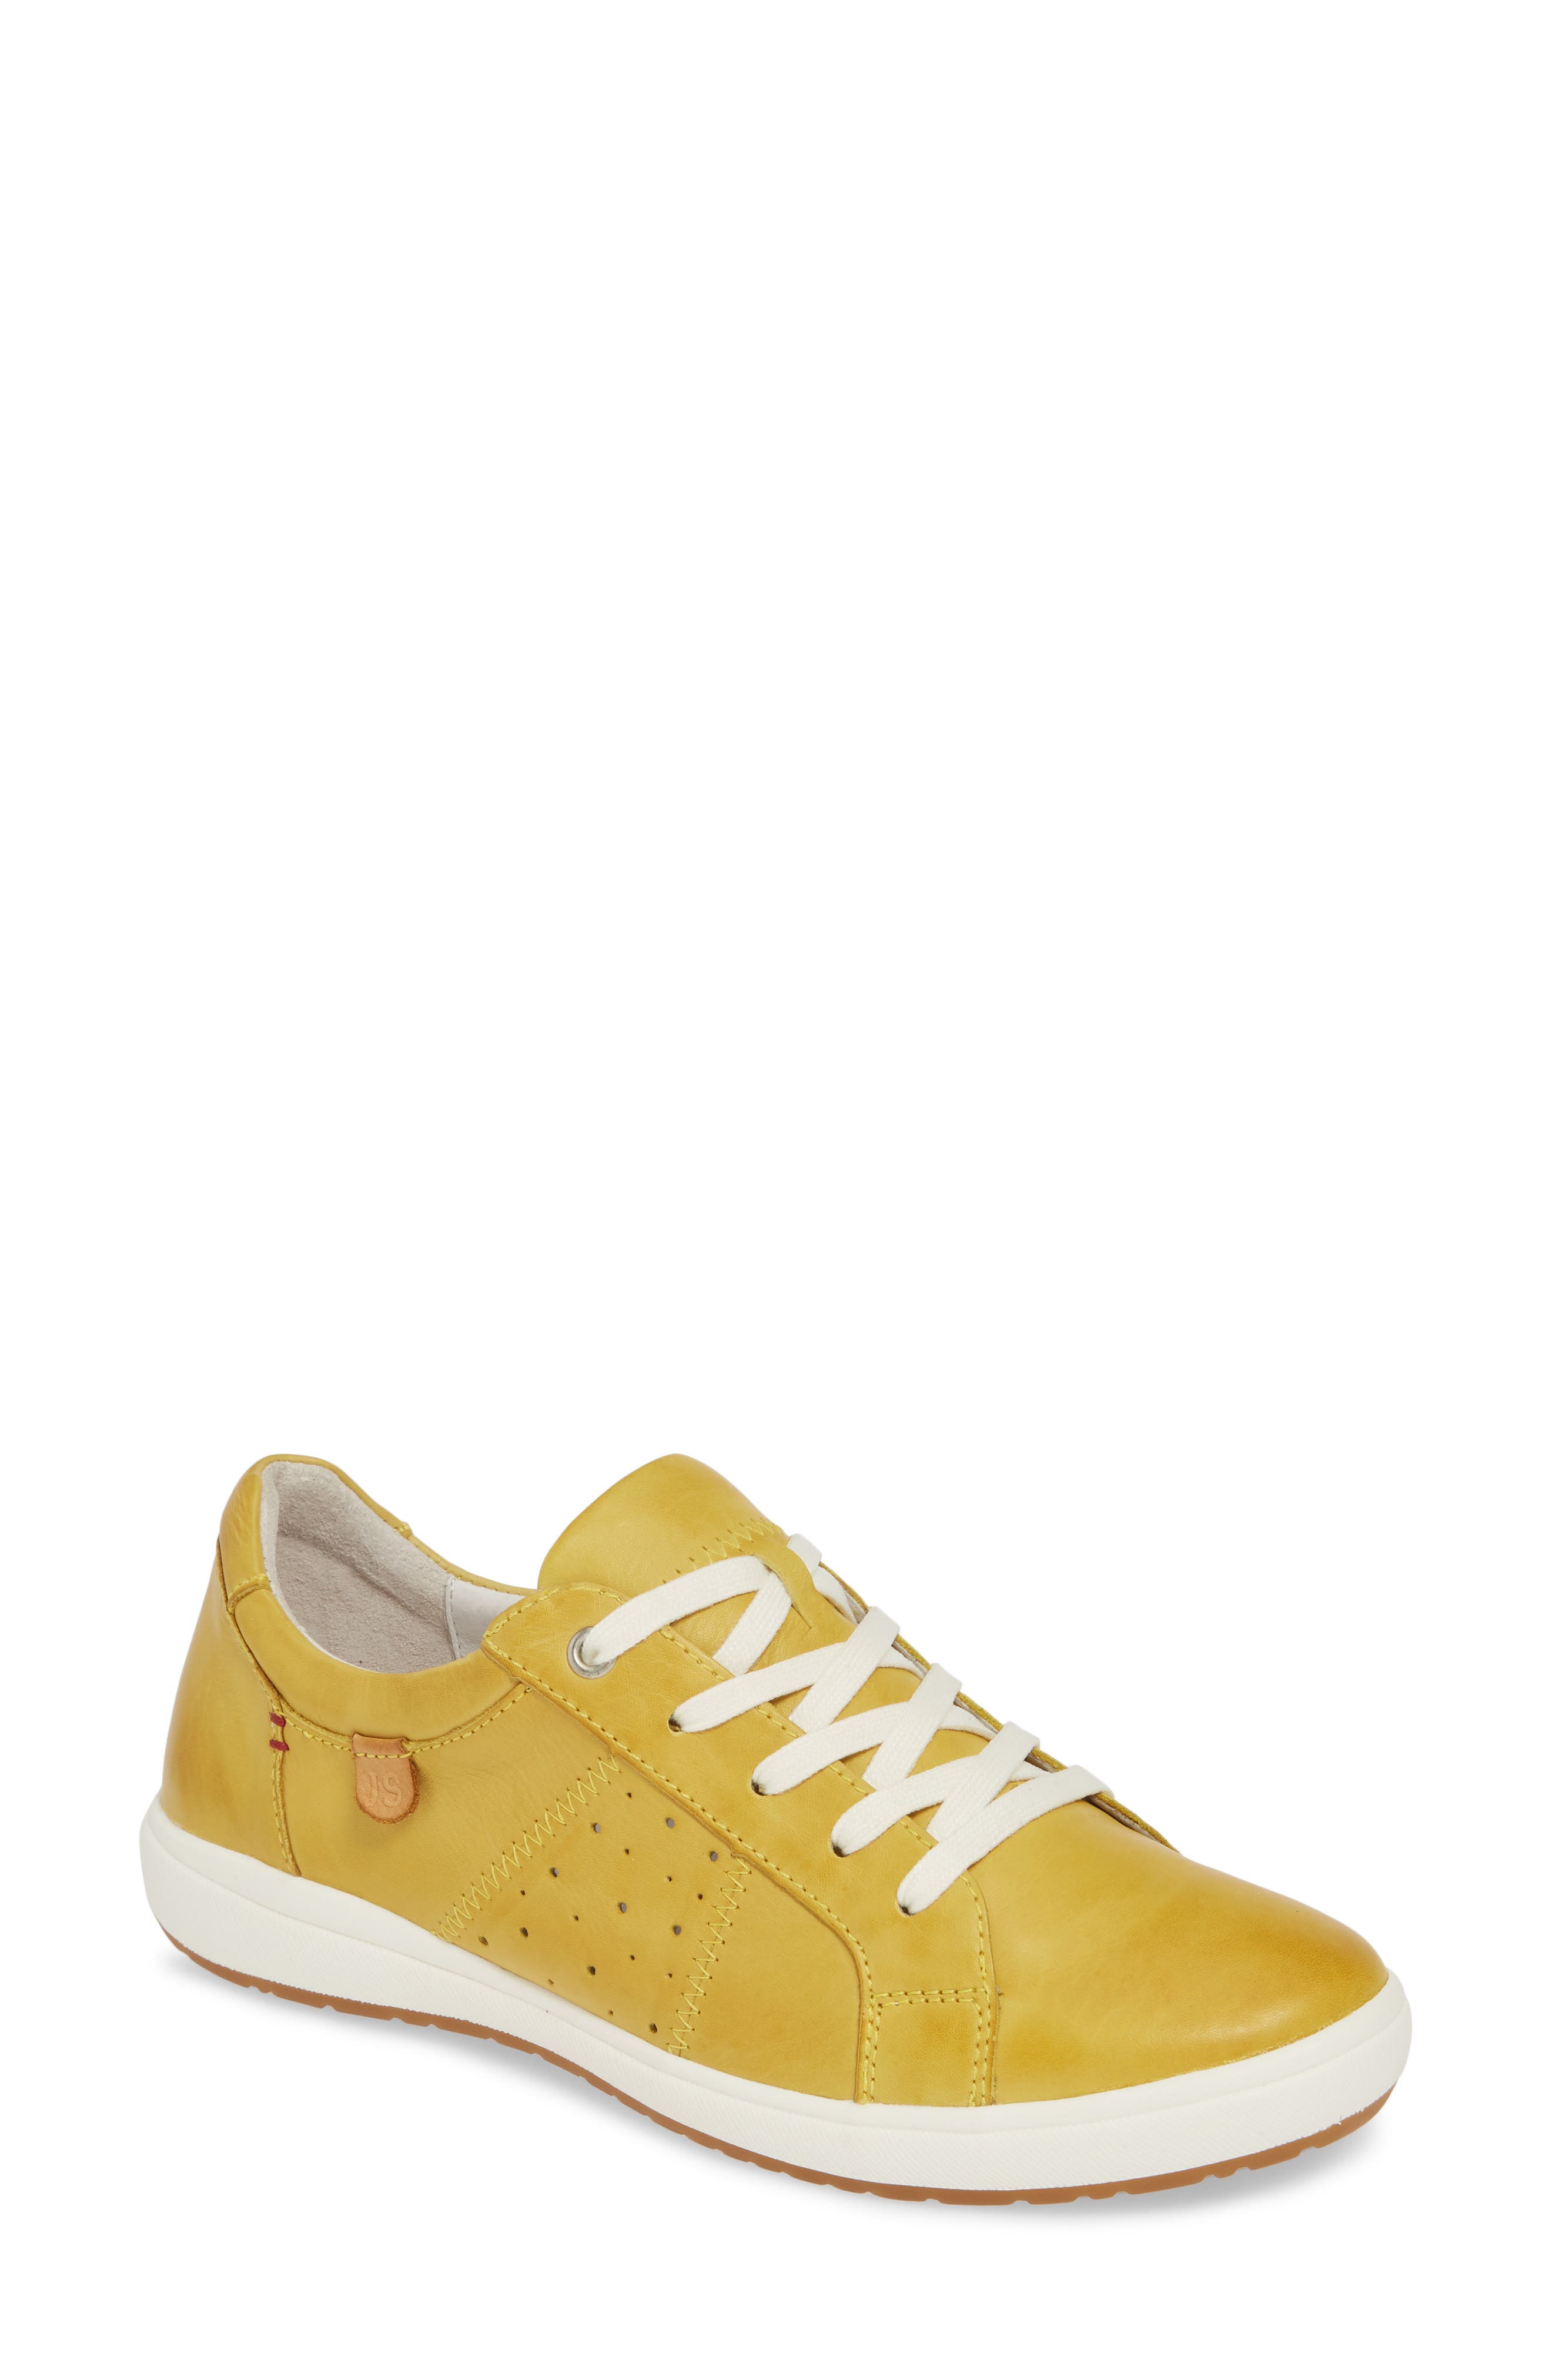 yellow tennis shoes womens